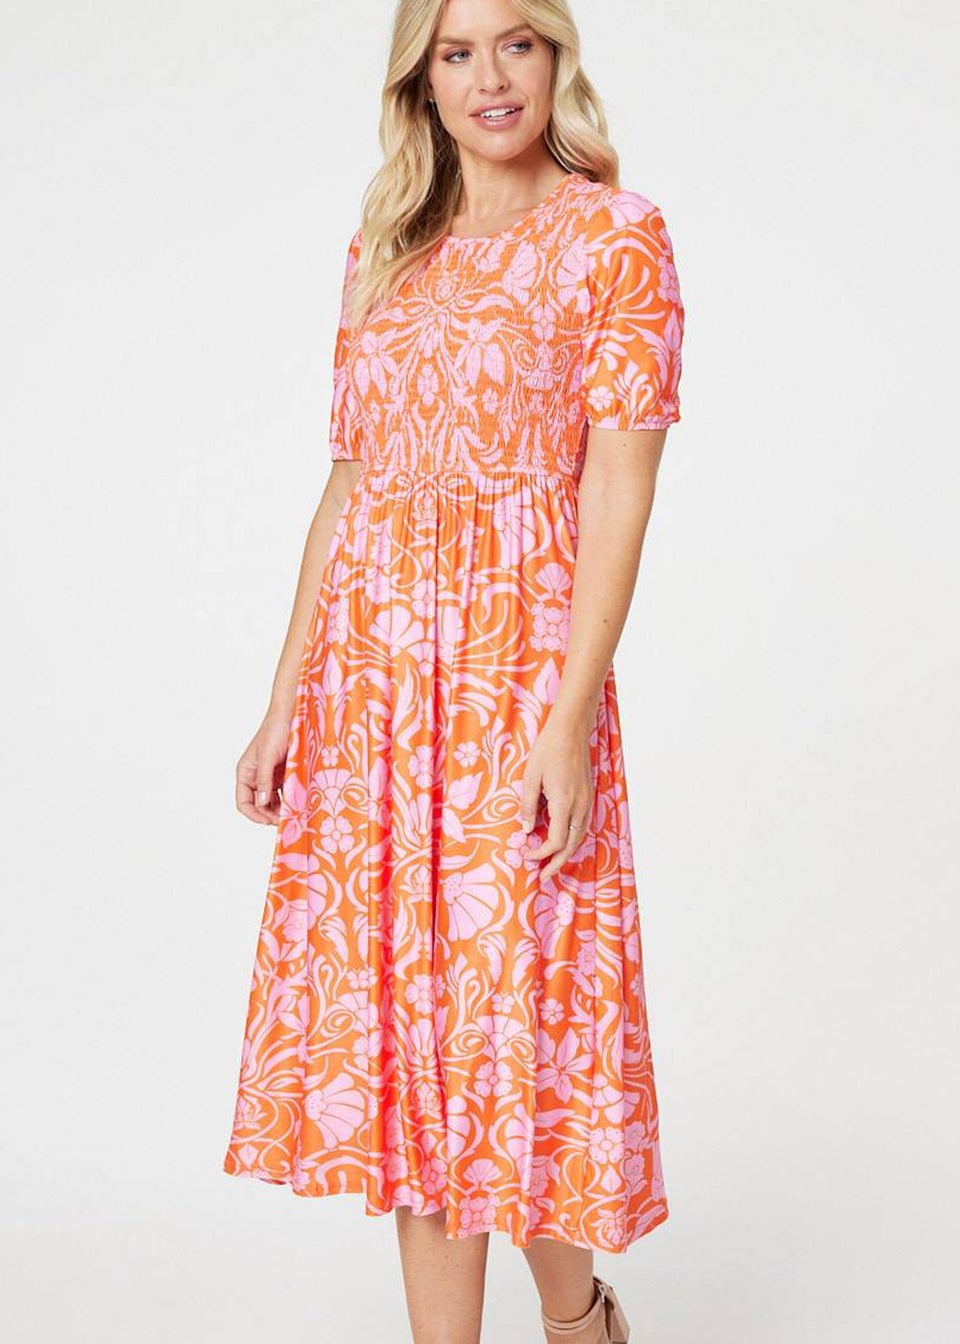 Izabel London Orange Floral Smocked Detail Midi Dress